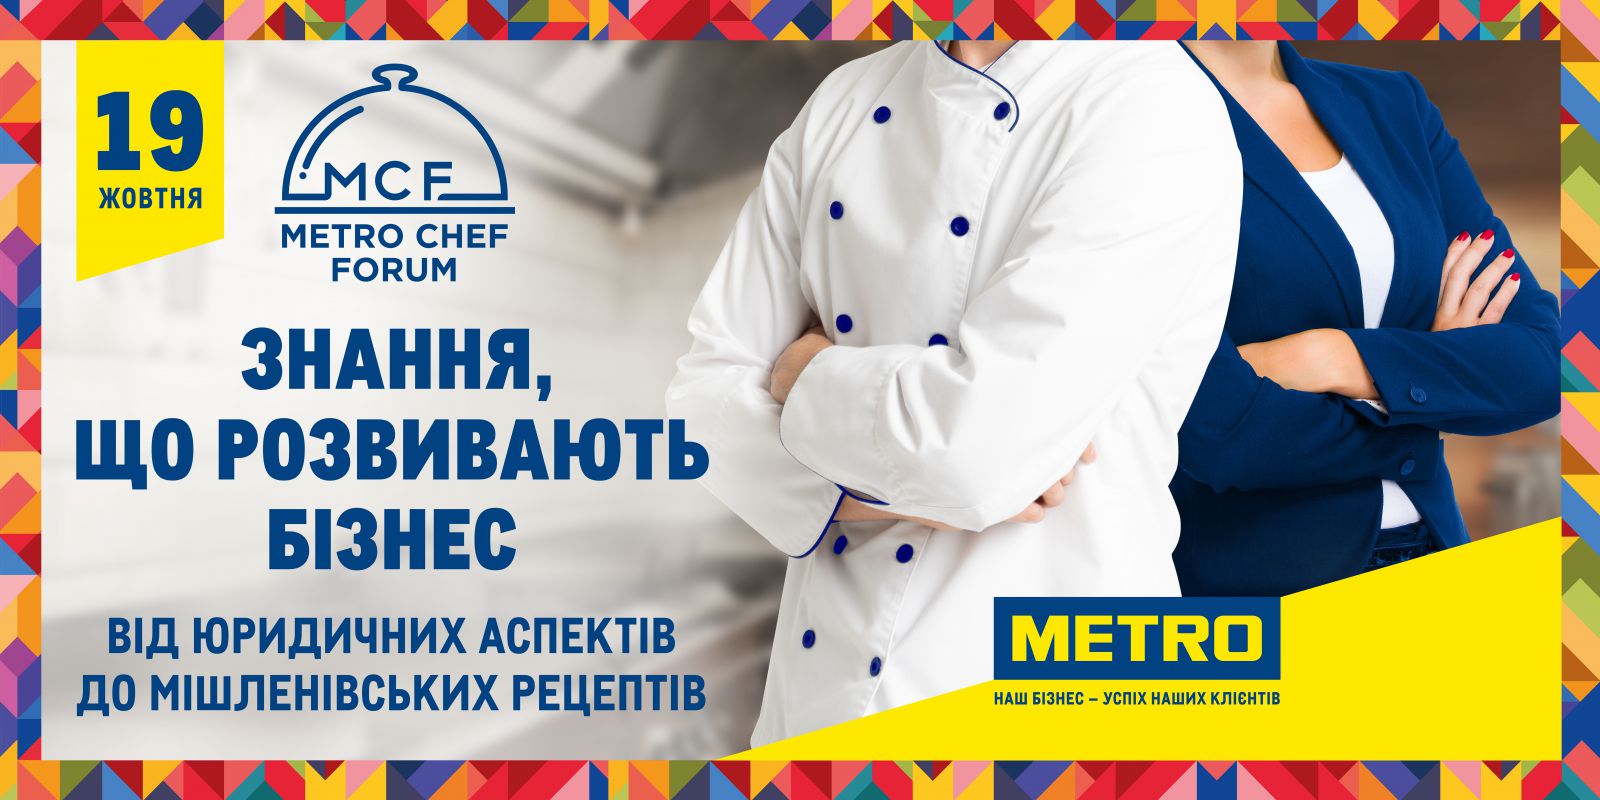 METRO Chef Forum